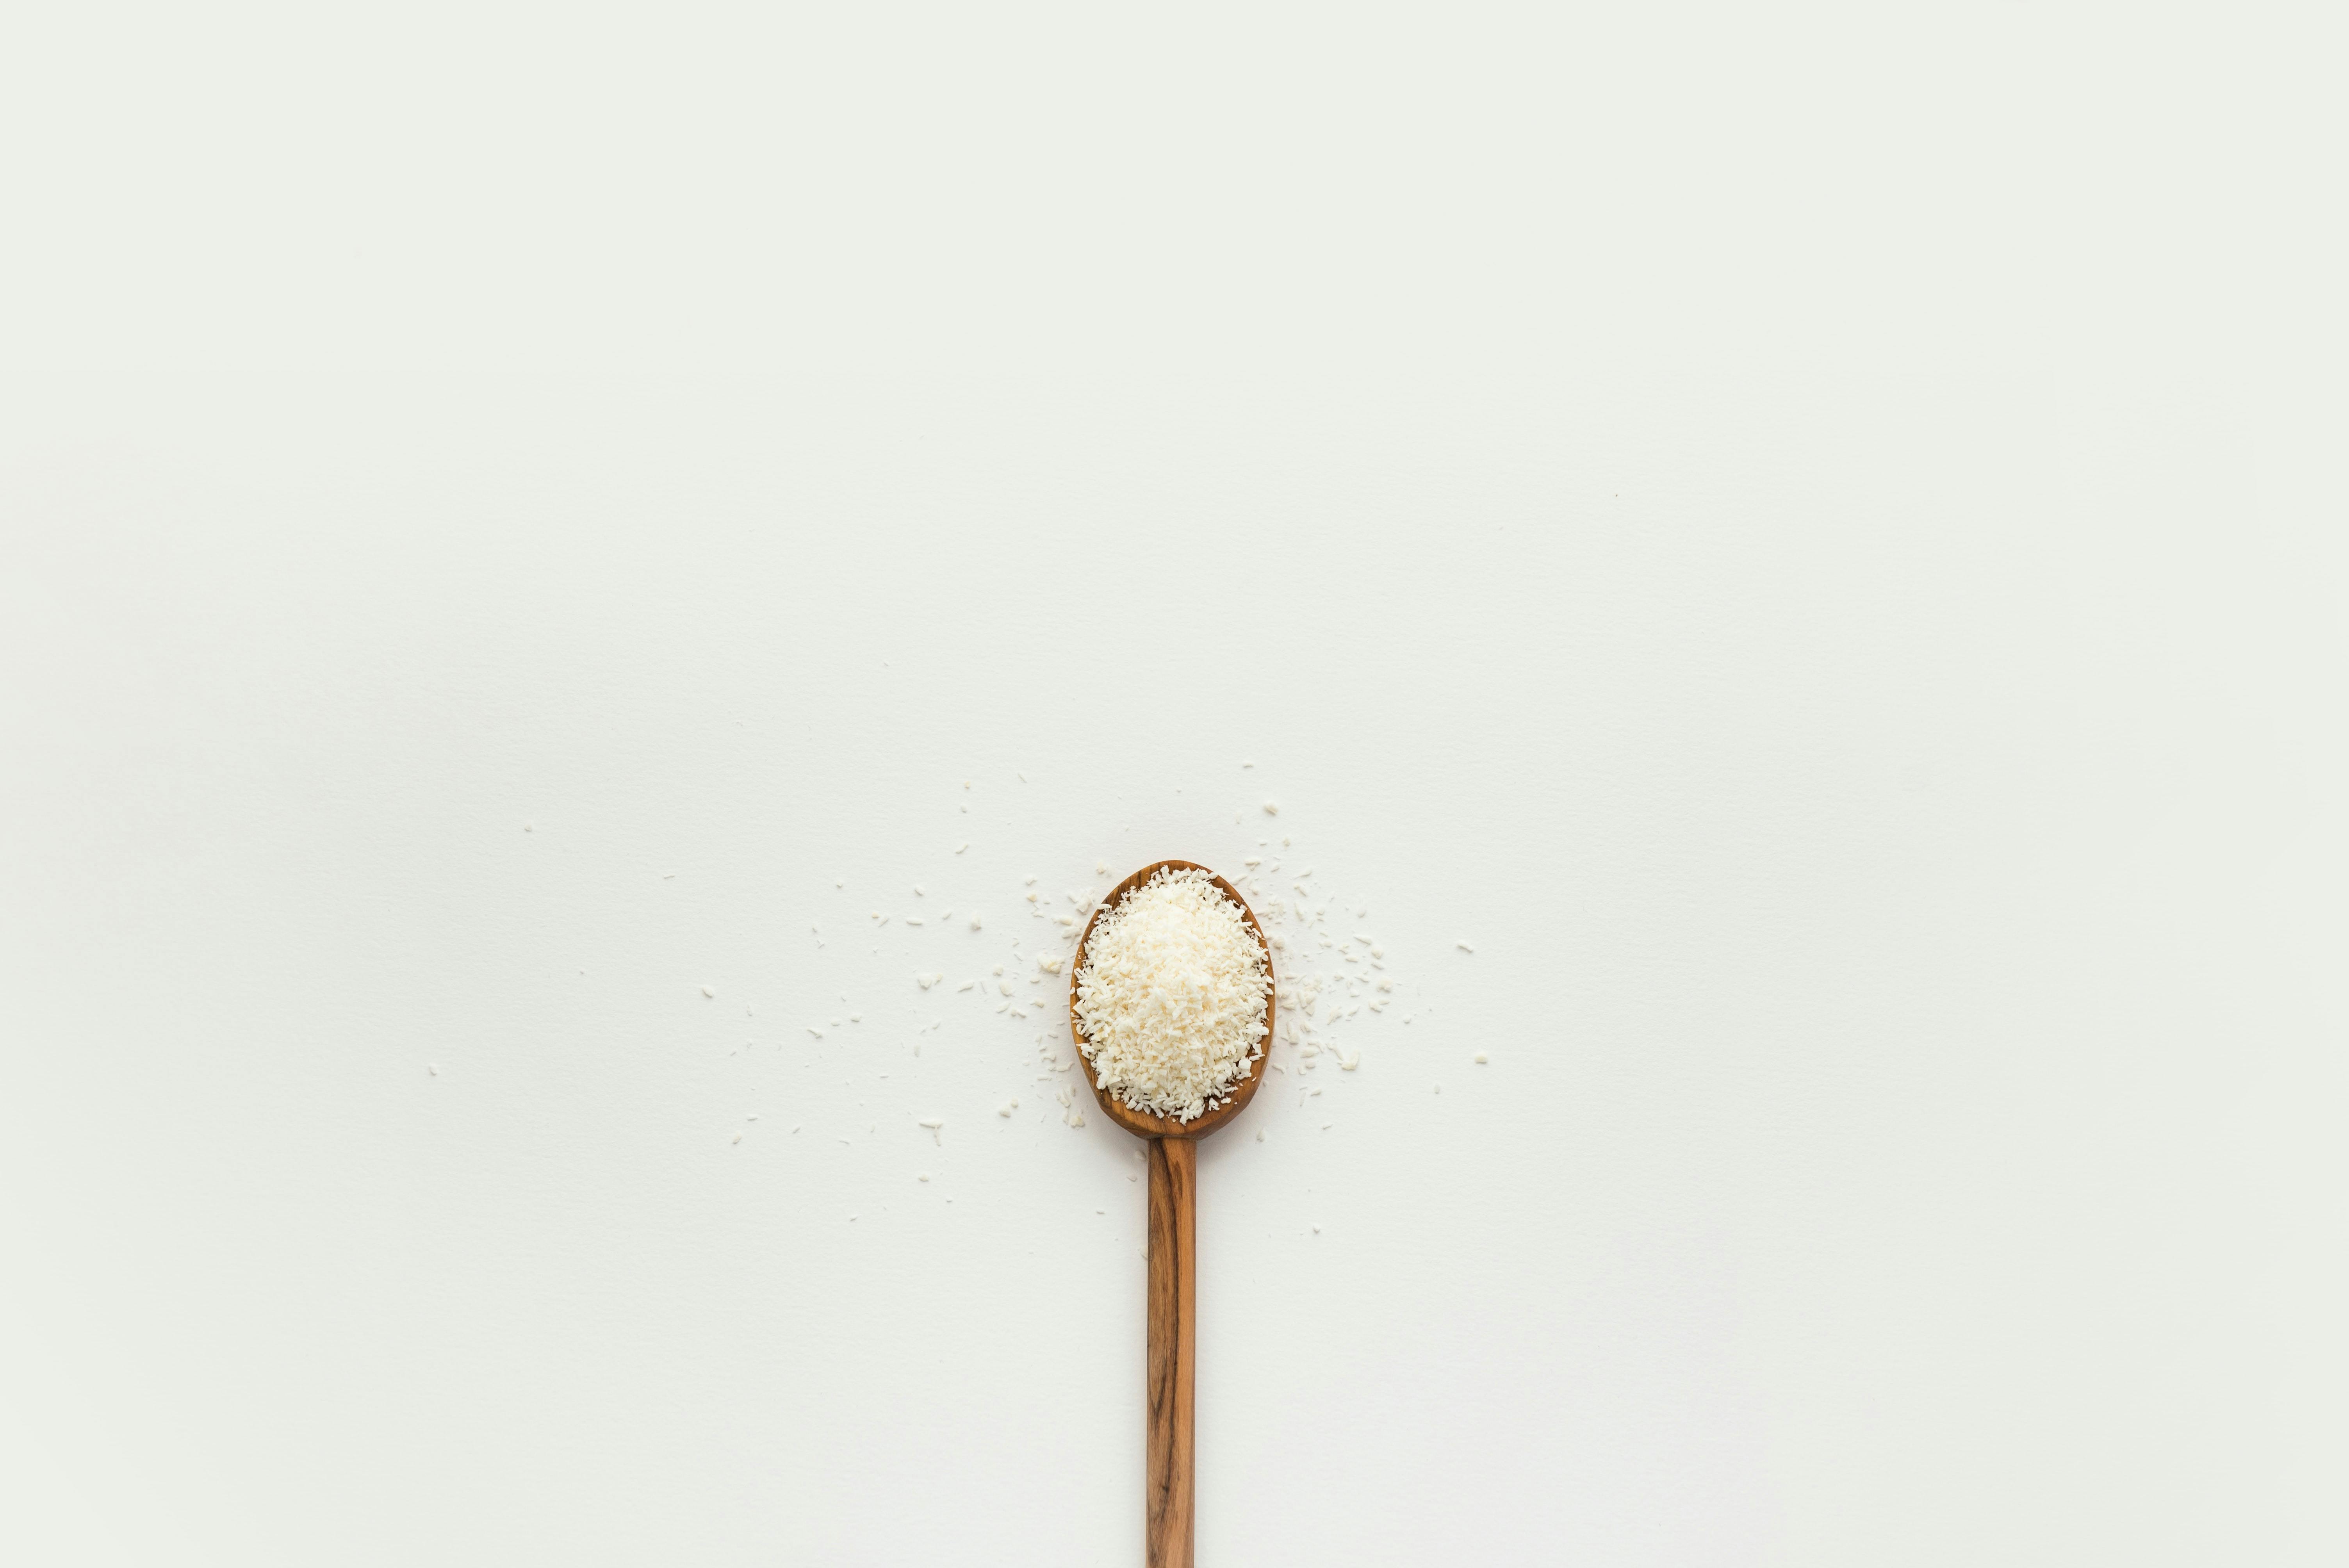 Grains of salt on wooden spoon